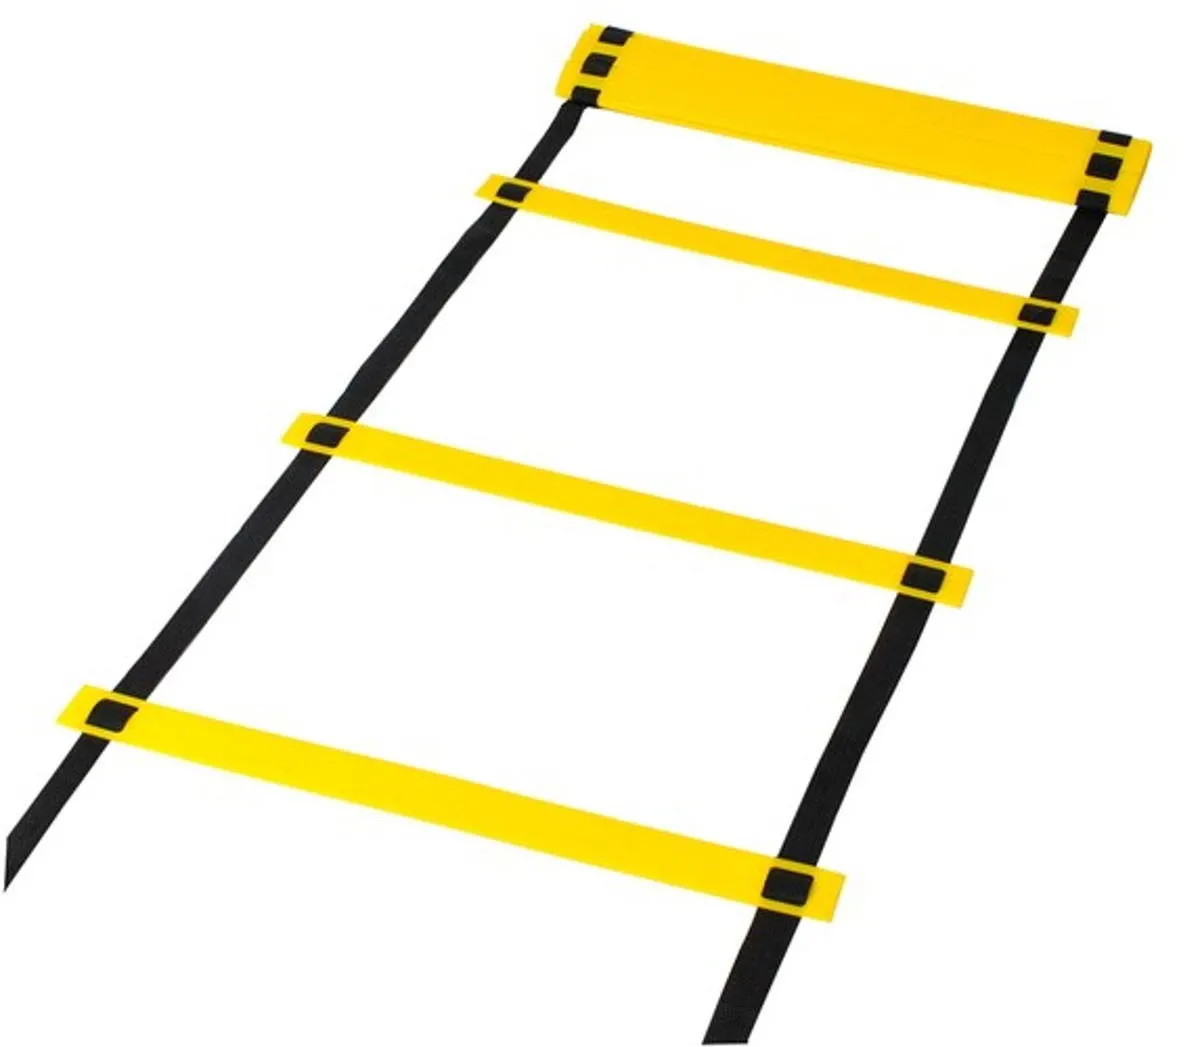 Coordination ladder 6 metre agility ladder